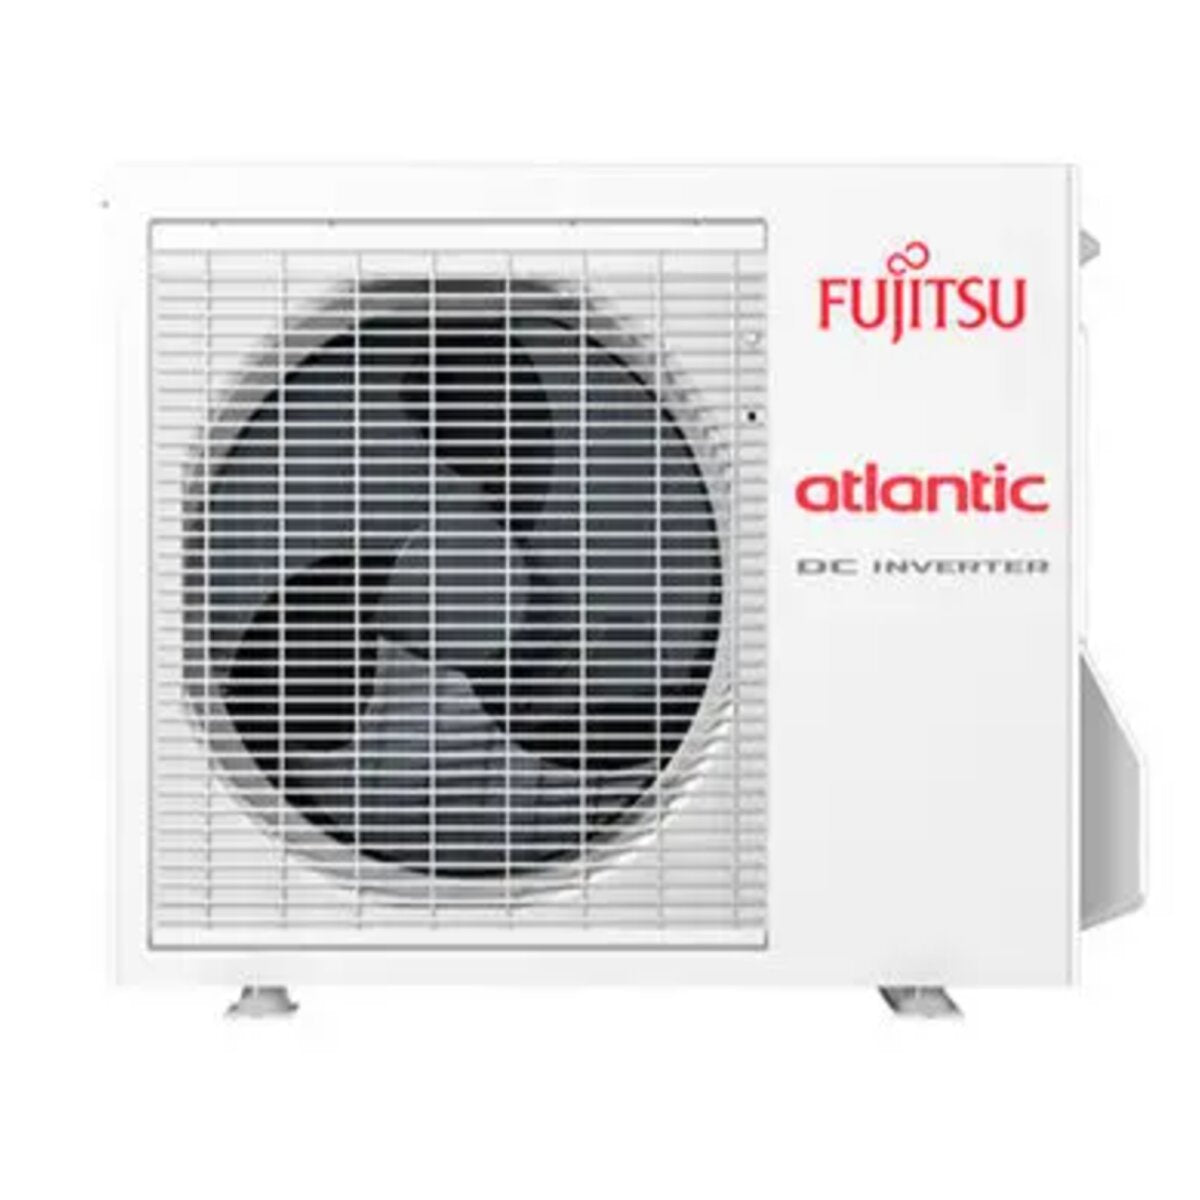 Atlantic Calypso Split inverter heat pump water heater 150 L class A+